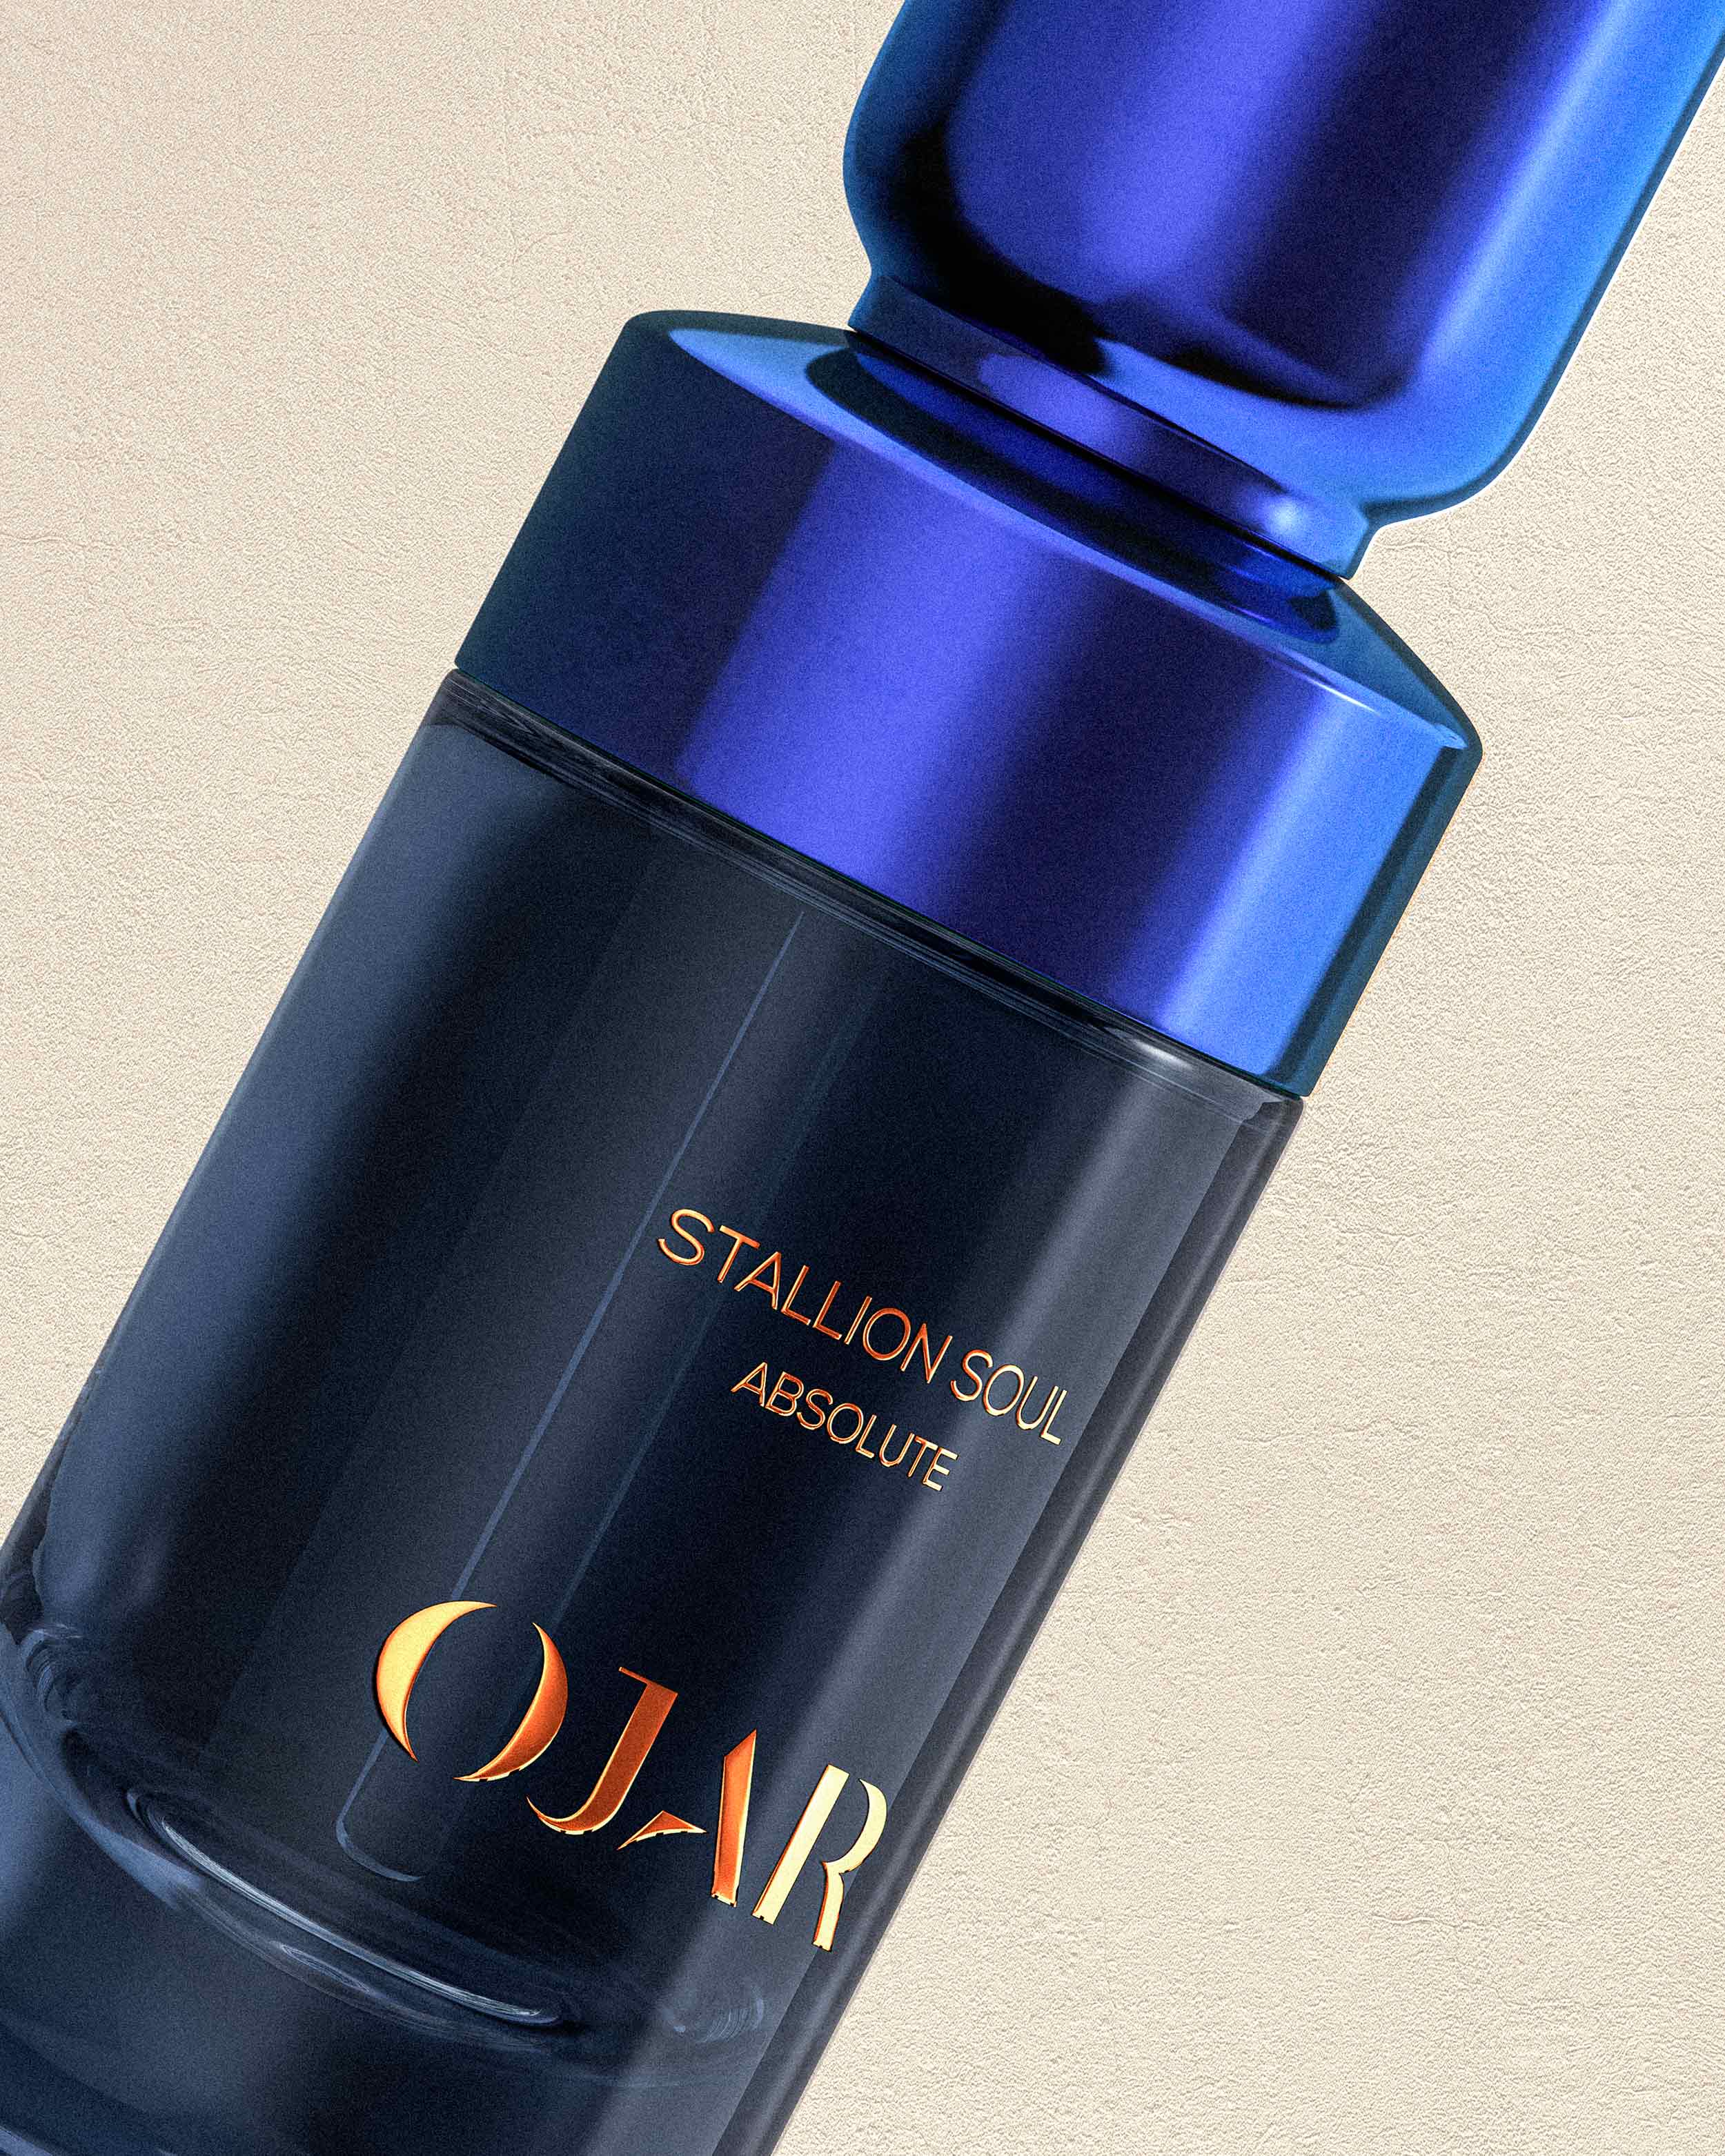 OJAR Absolute Stallion Soul Perfume Close Up